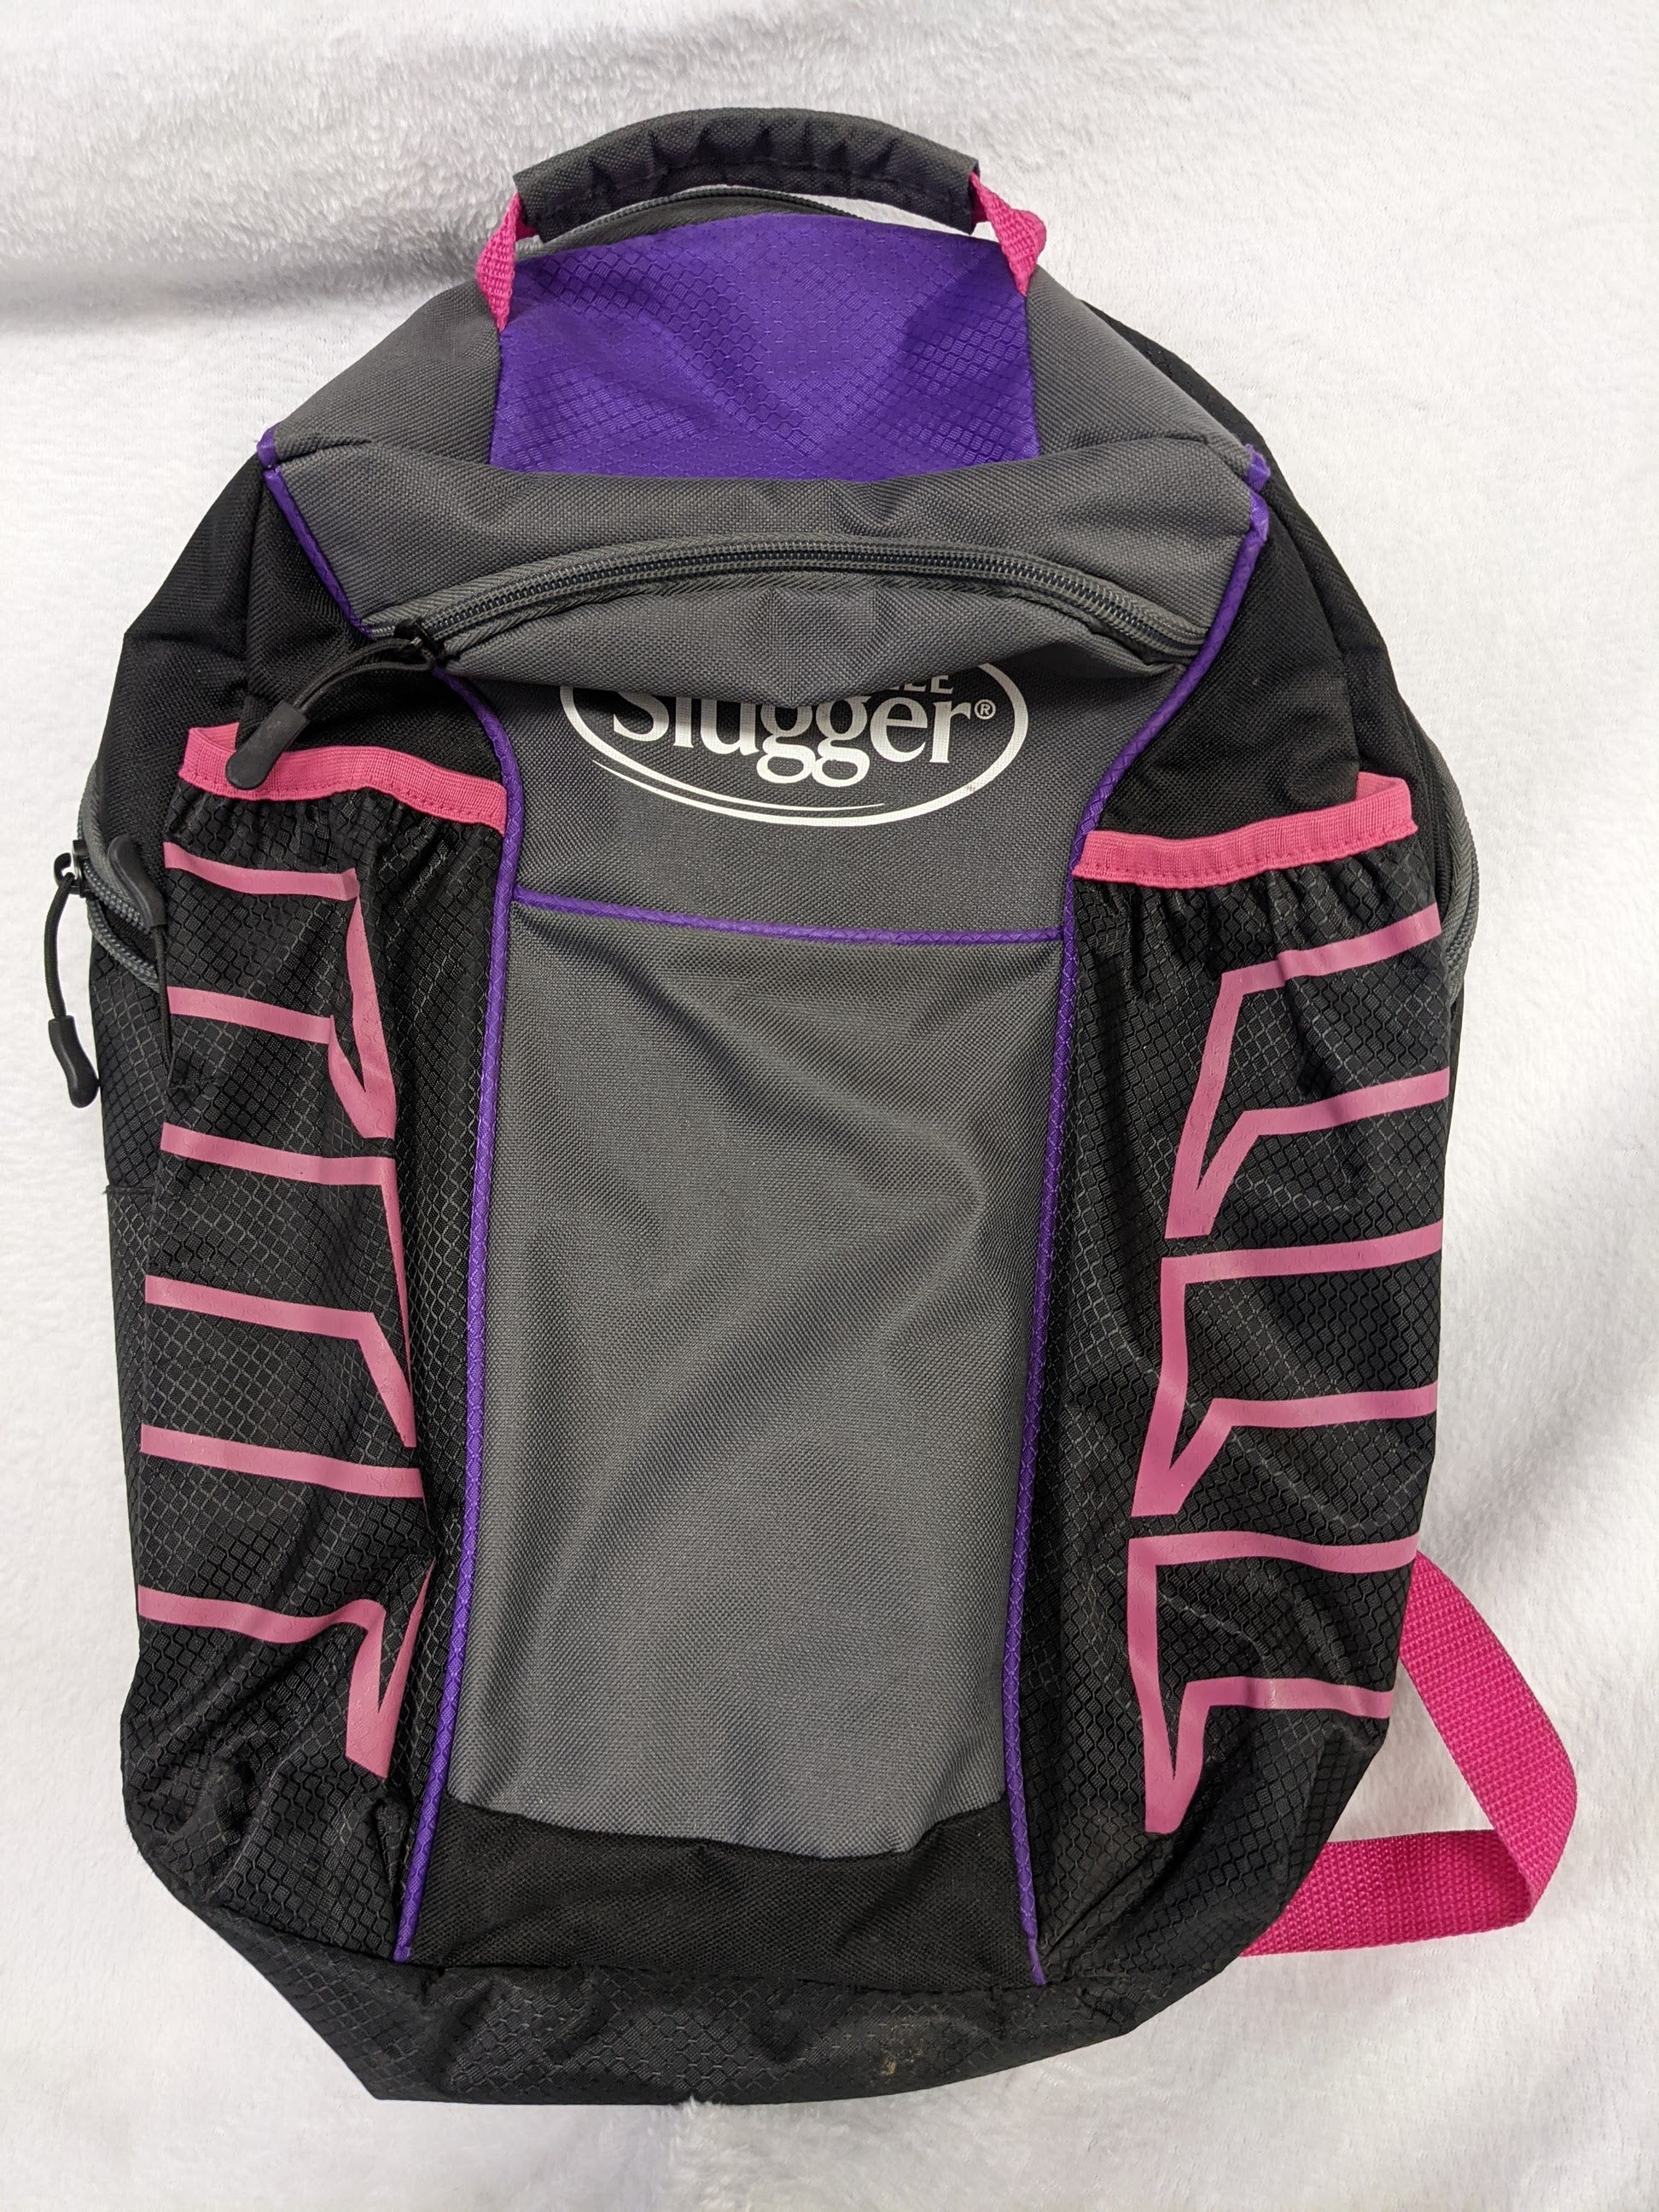 louisville backpack